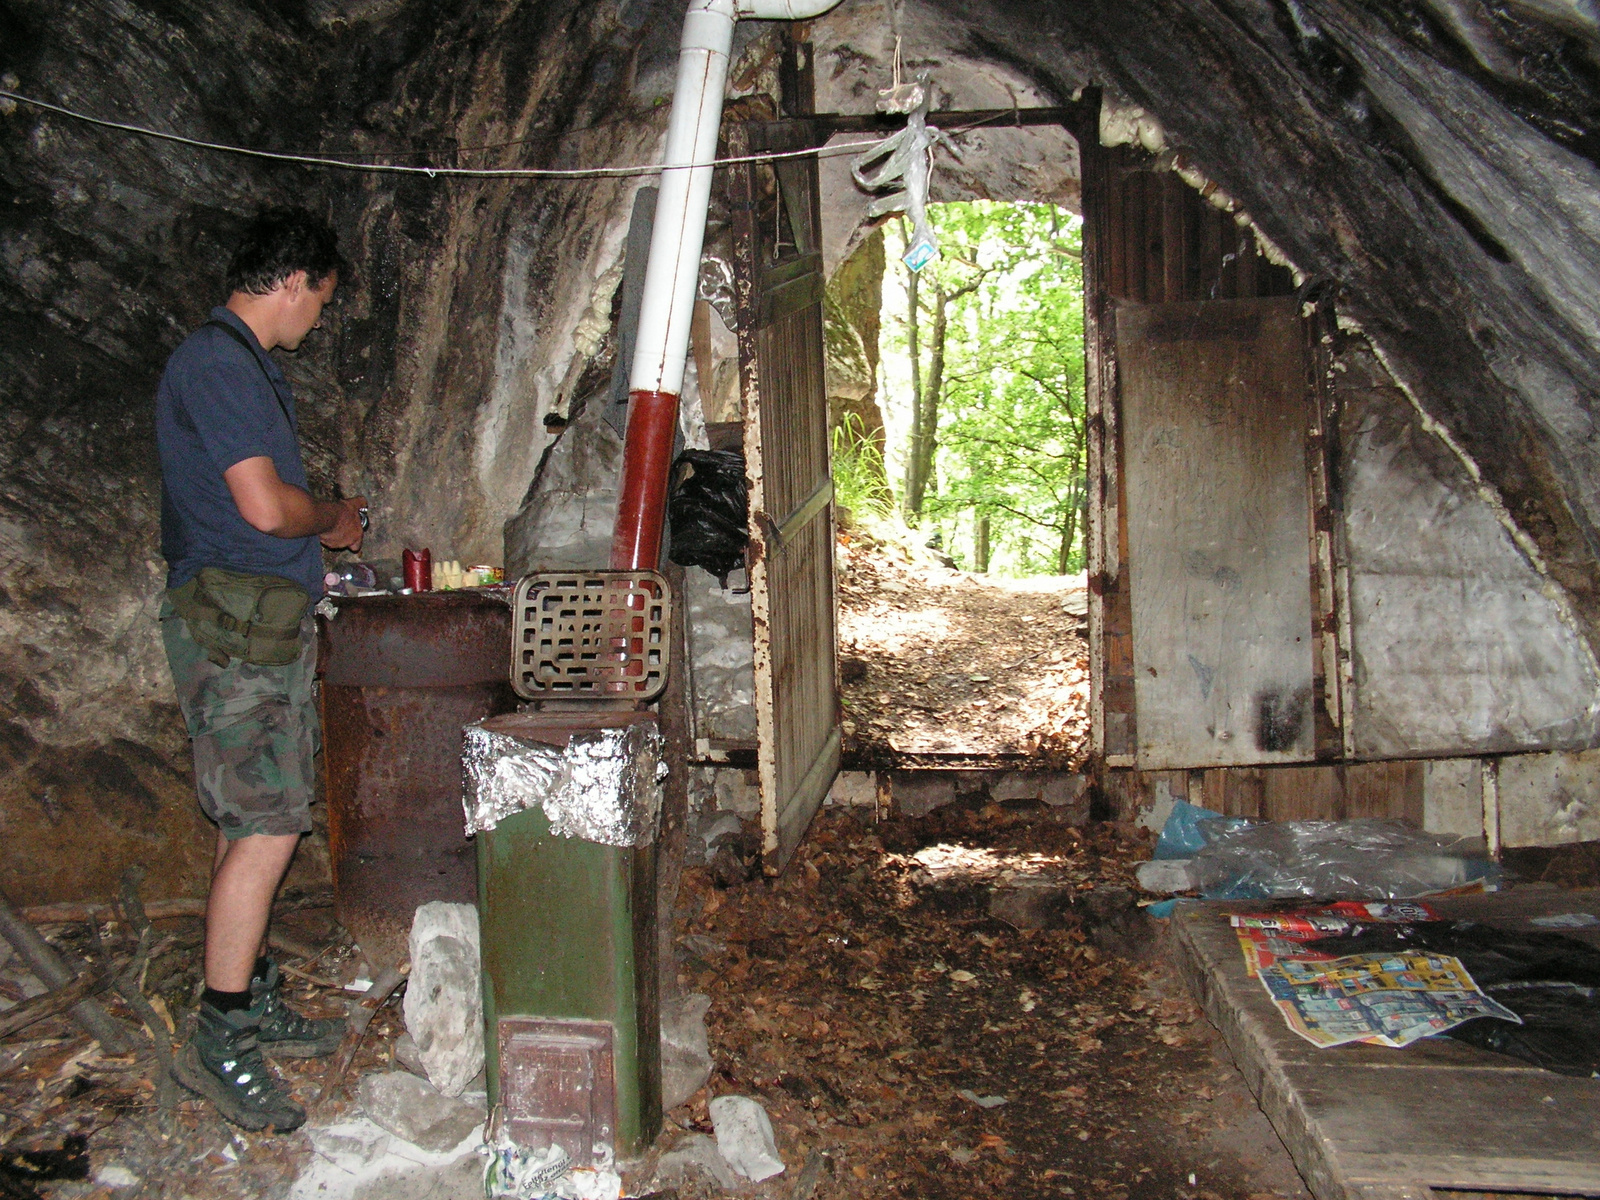 159 Cserepeskői-barlang 2008-ban